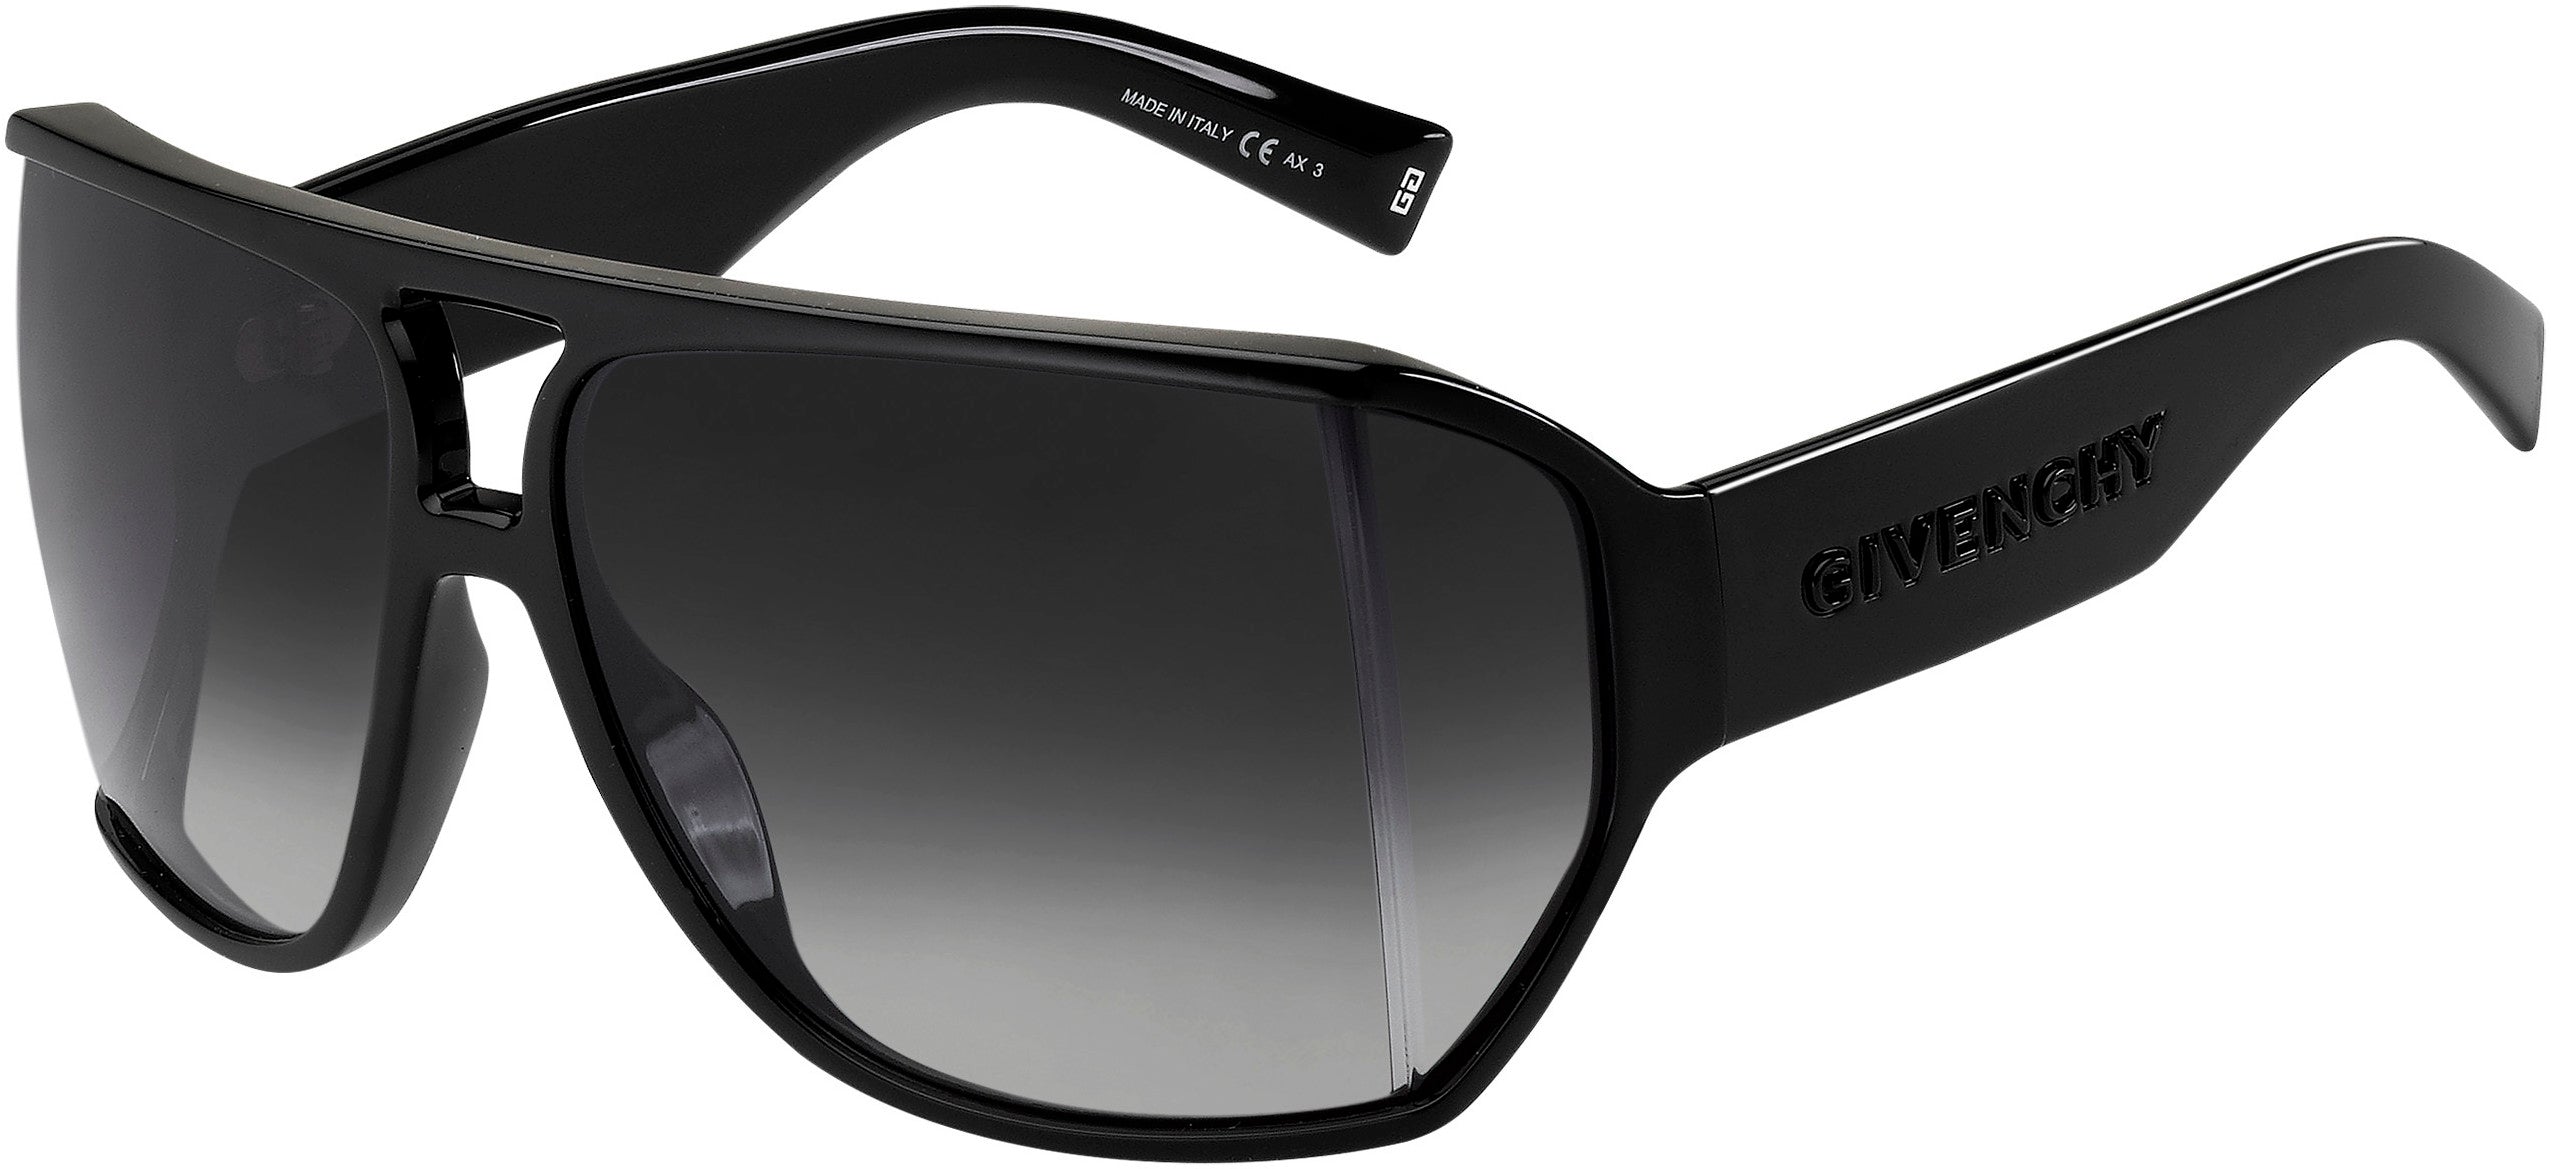  Givenchy 7178/S Square Sunglasses 0807-0807  Black (9O Dark Gray Gradient)